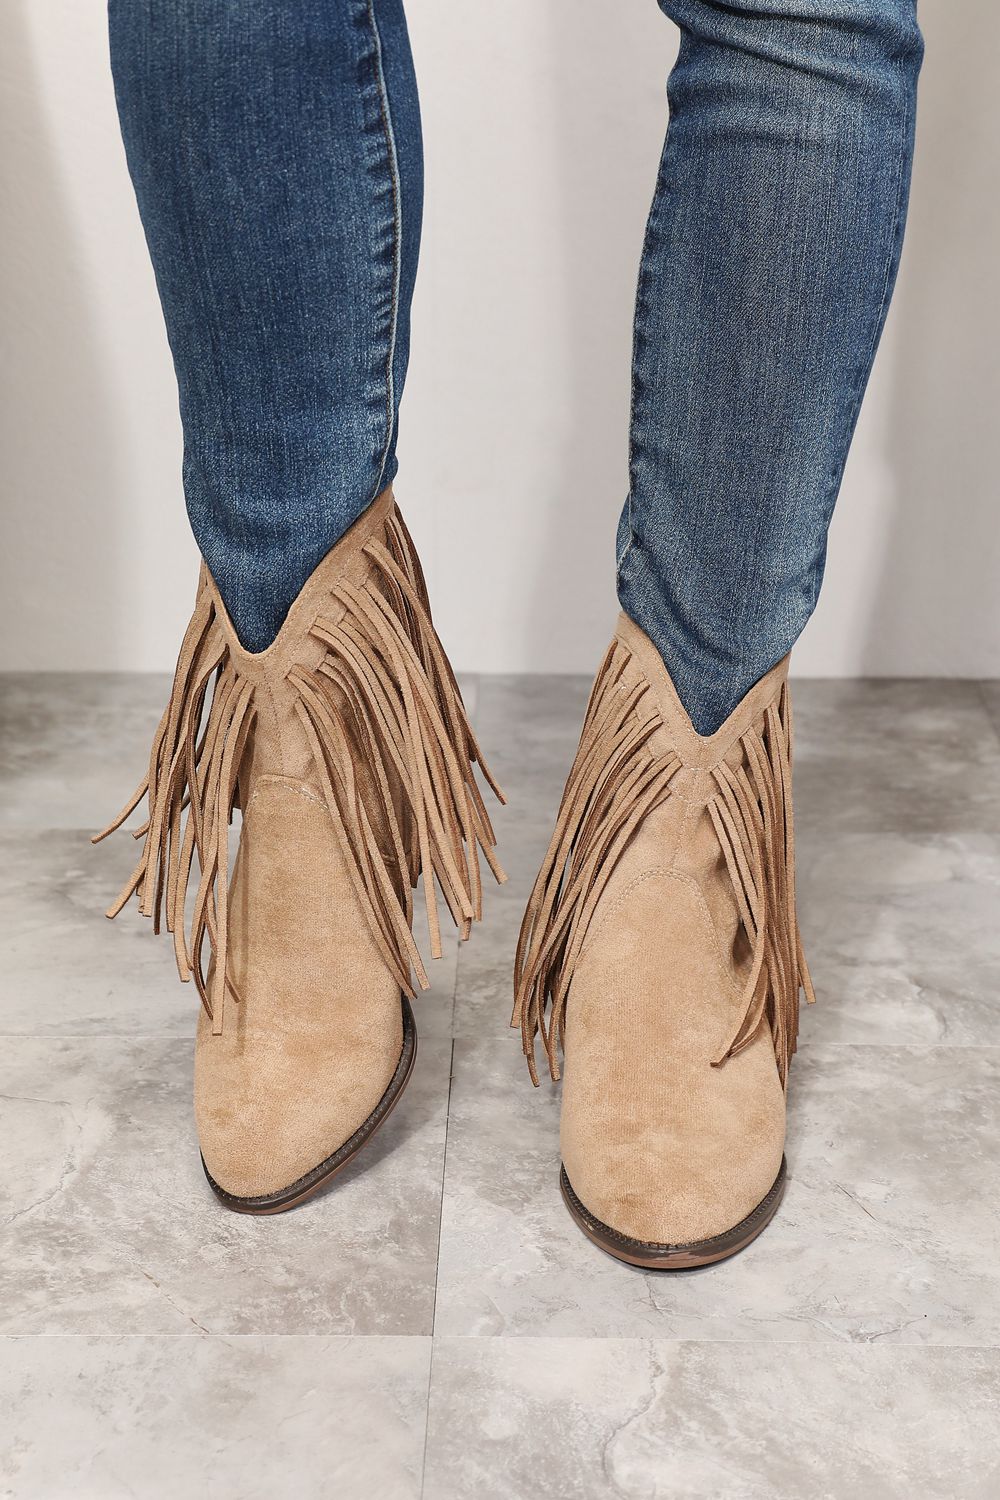 Olivia Fringe Cowboy Western Ankle Boots